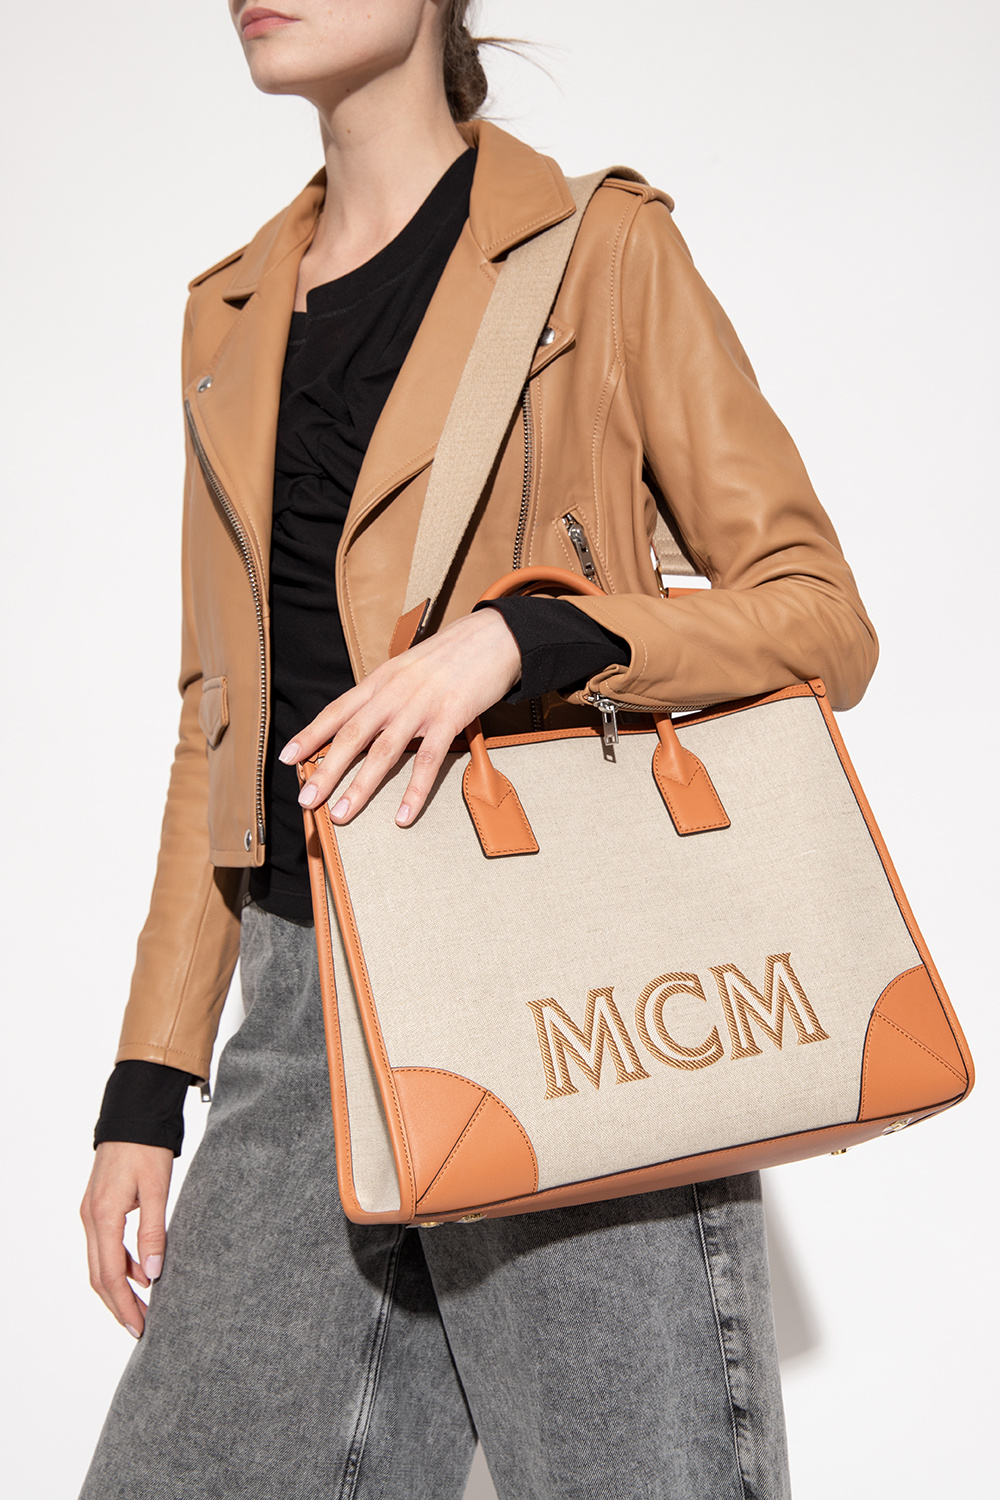 Mcm Large Munchen Leather Tote Bag - Black